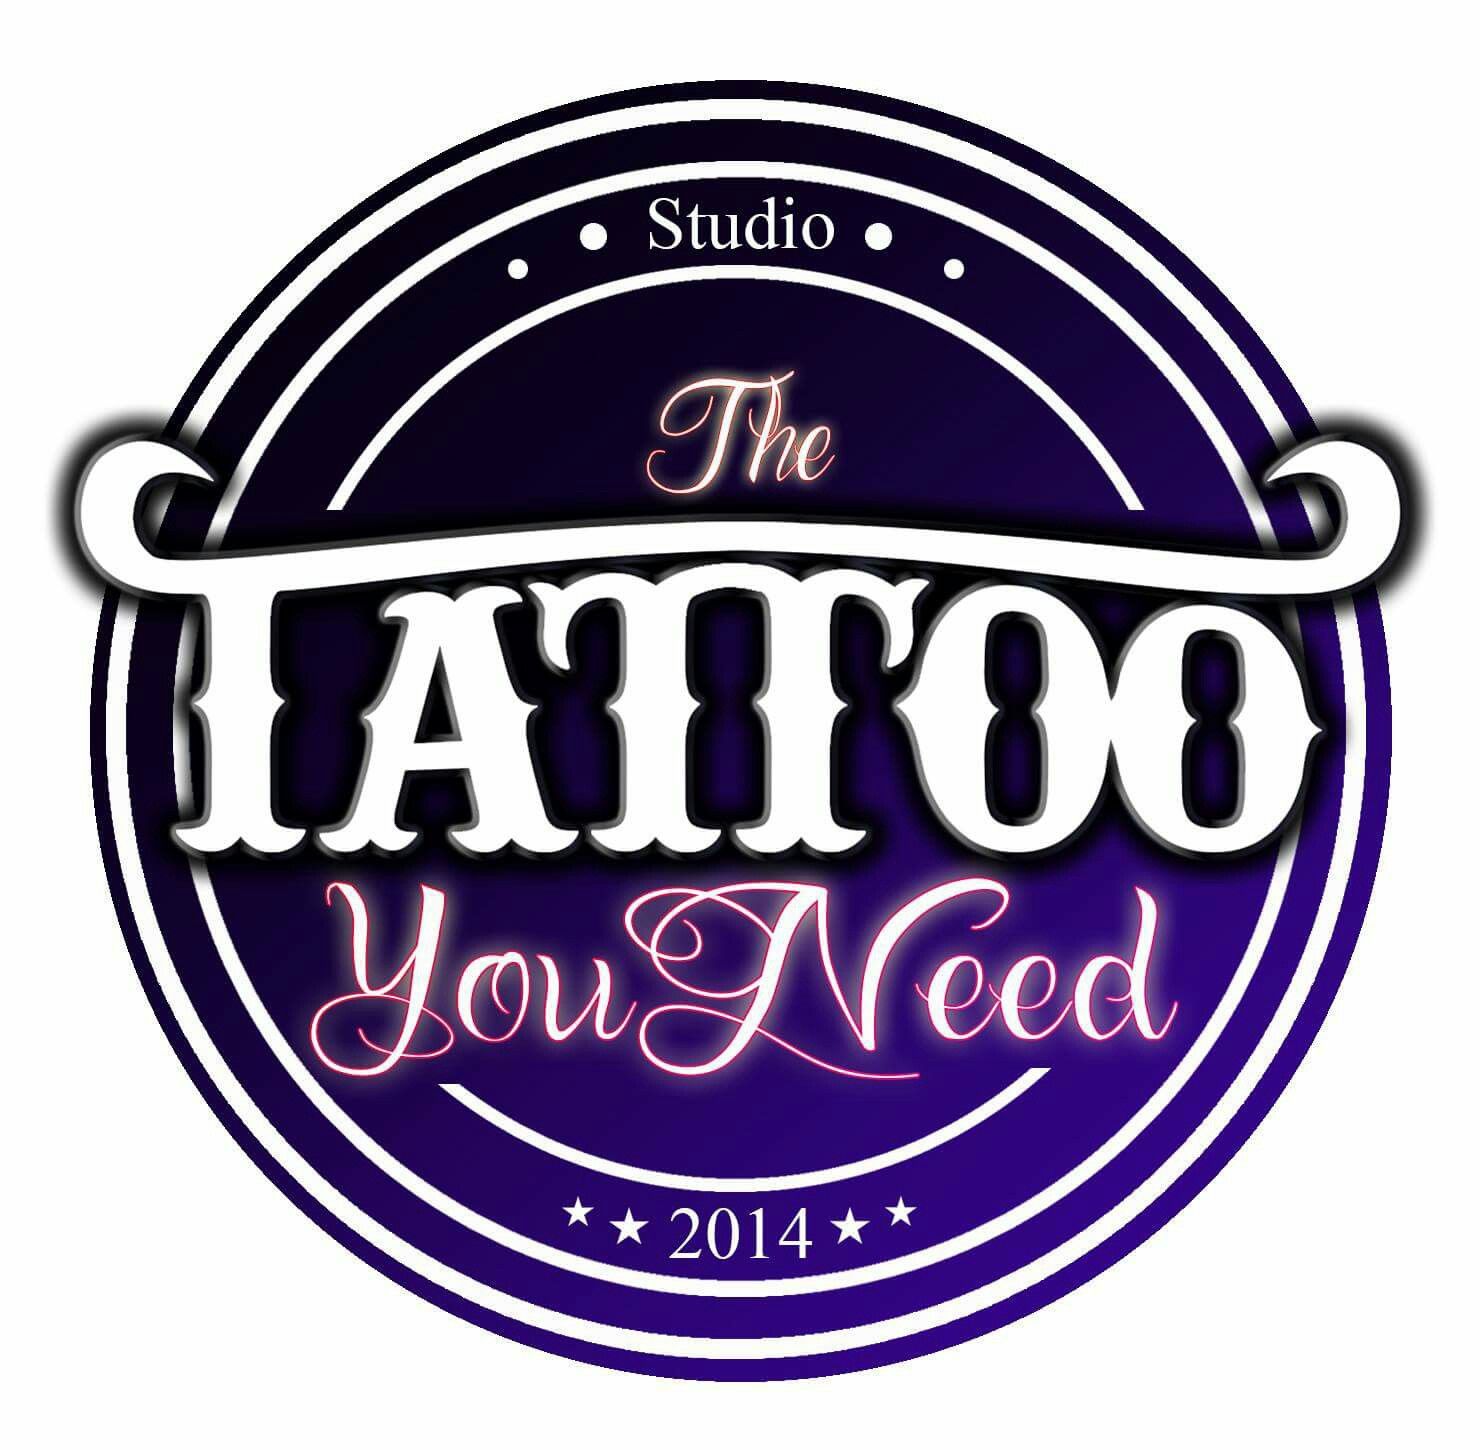 The Tattoo You Need • Tattoo Studio • Tattoodo